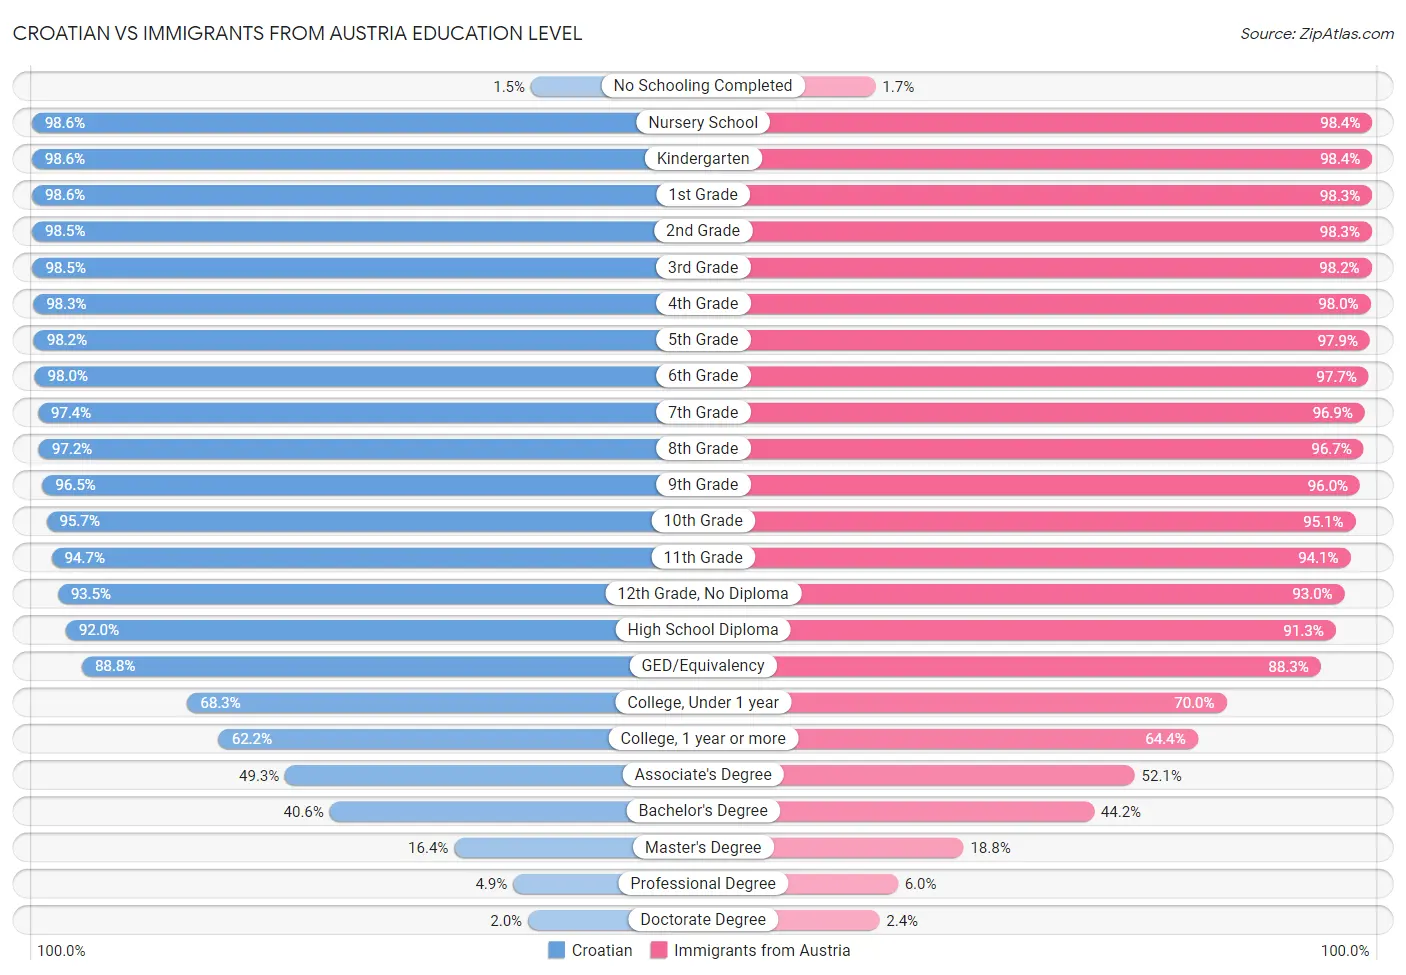 Croatian vs Immigrants from Austria Education Level